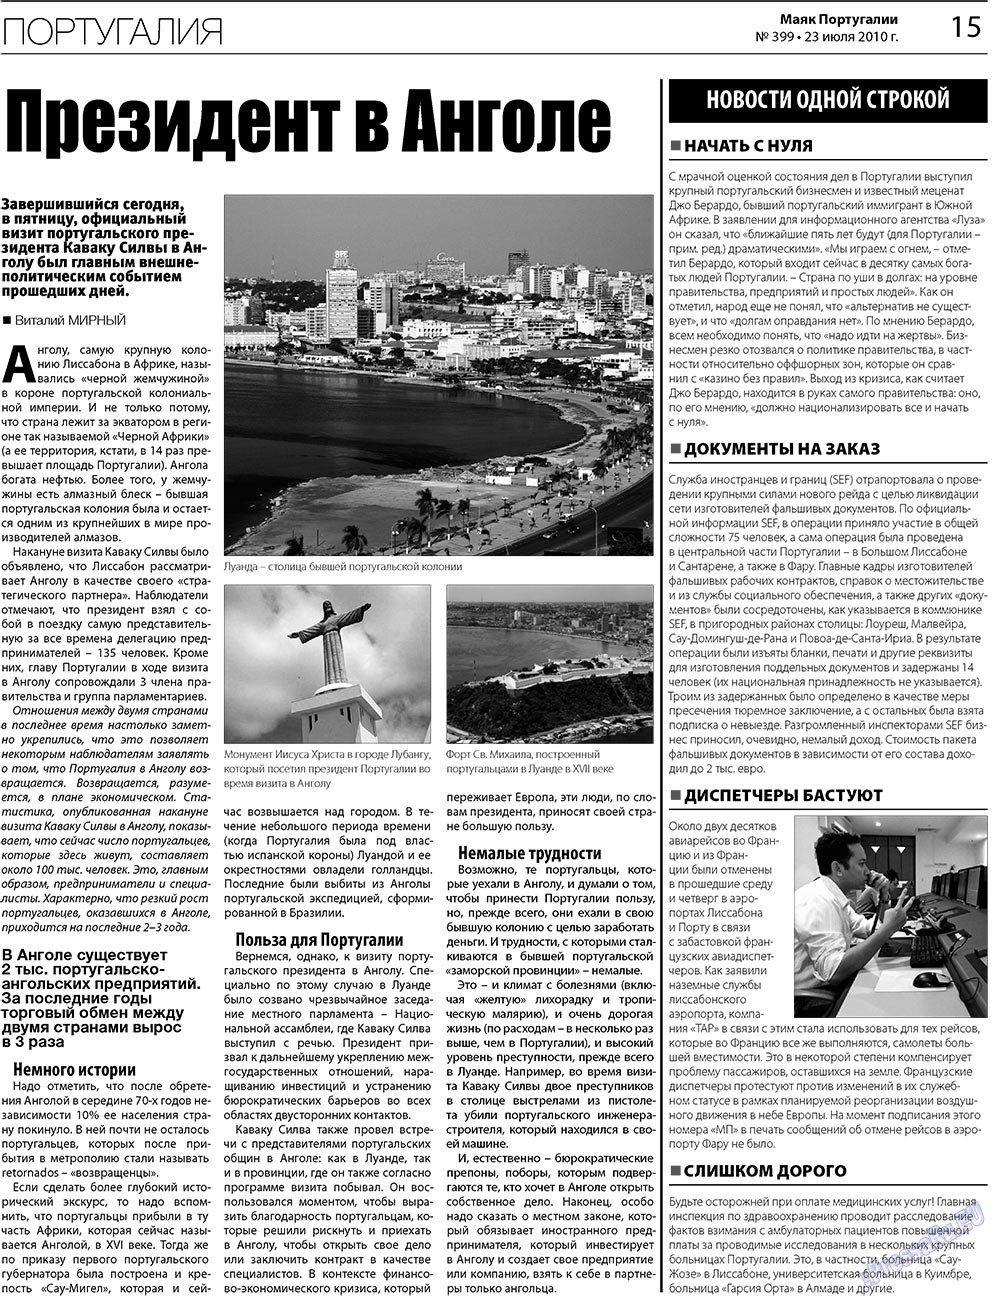 Маяк Португалии, газета. 2010 №399 стр.15